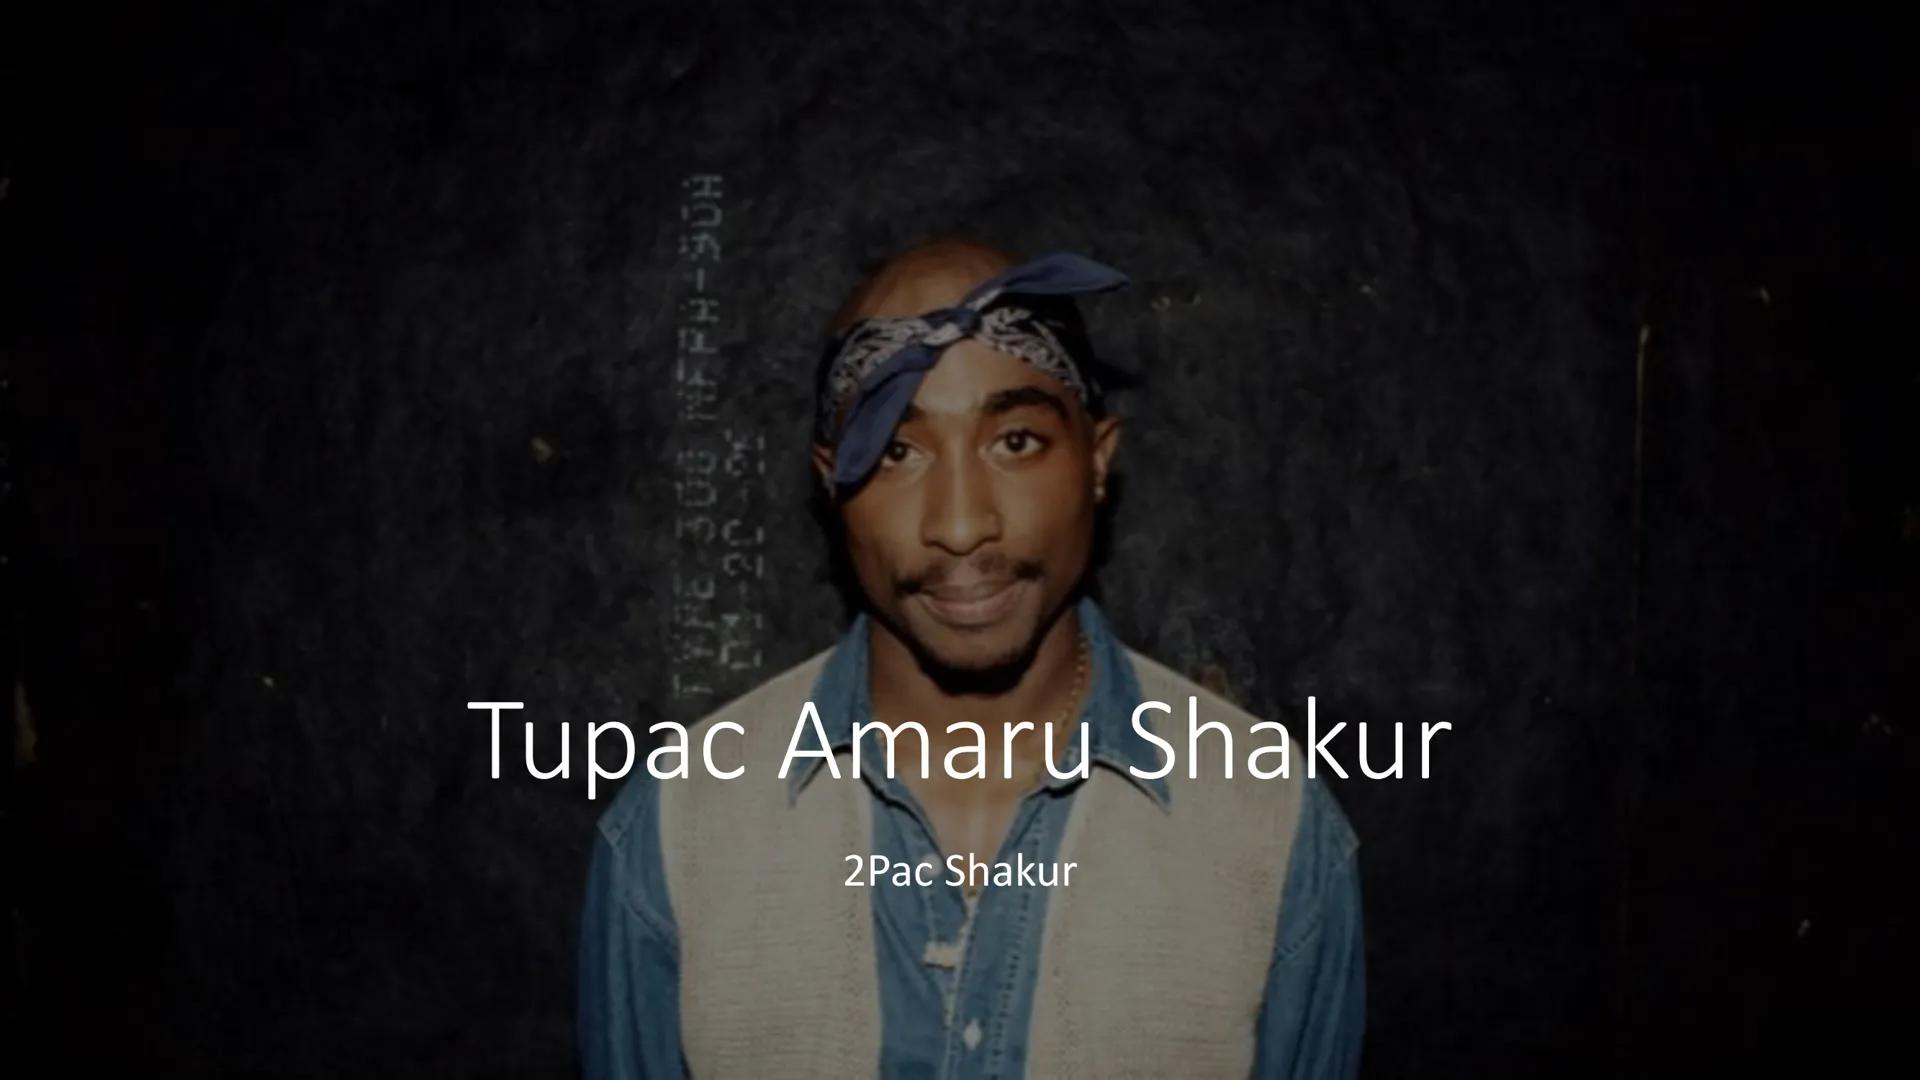 HOS-HAUN DOS 3141
Tupac Amaru Shakur
2Pac Shakur 1 Allgemeines
●
●
●
●
2 Leben
.
●
●
●
●
Tupac Amaru Shakur
Geburtsdatum: 16. Juni 1971 als 